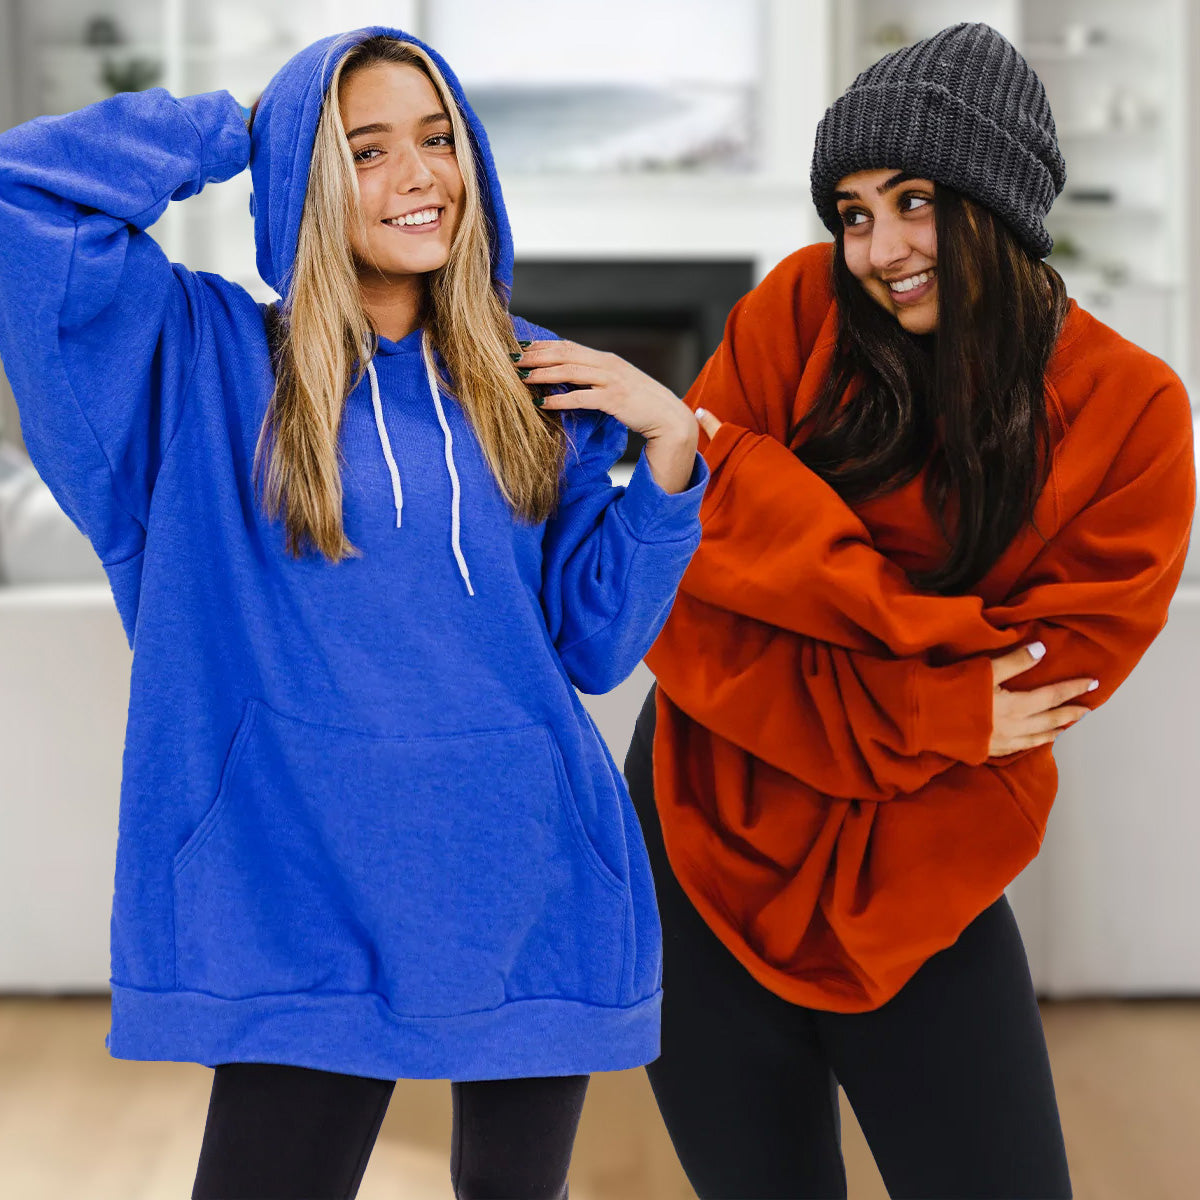 girls wearing hoodies